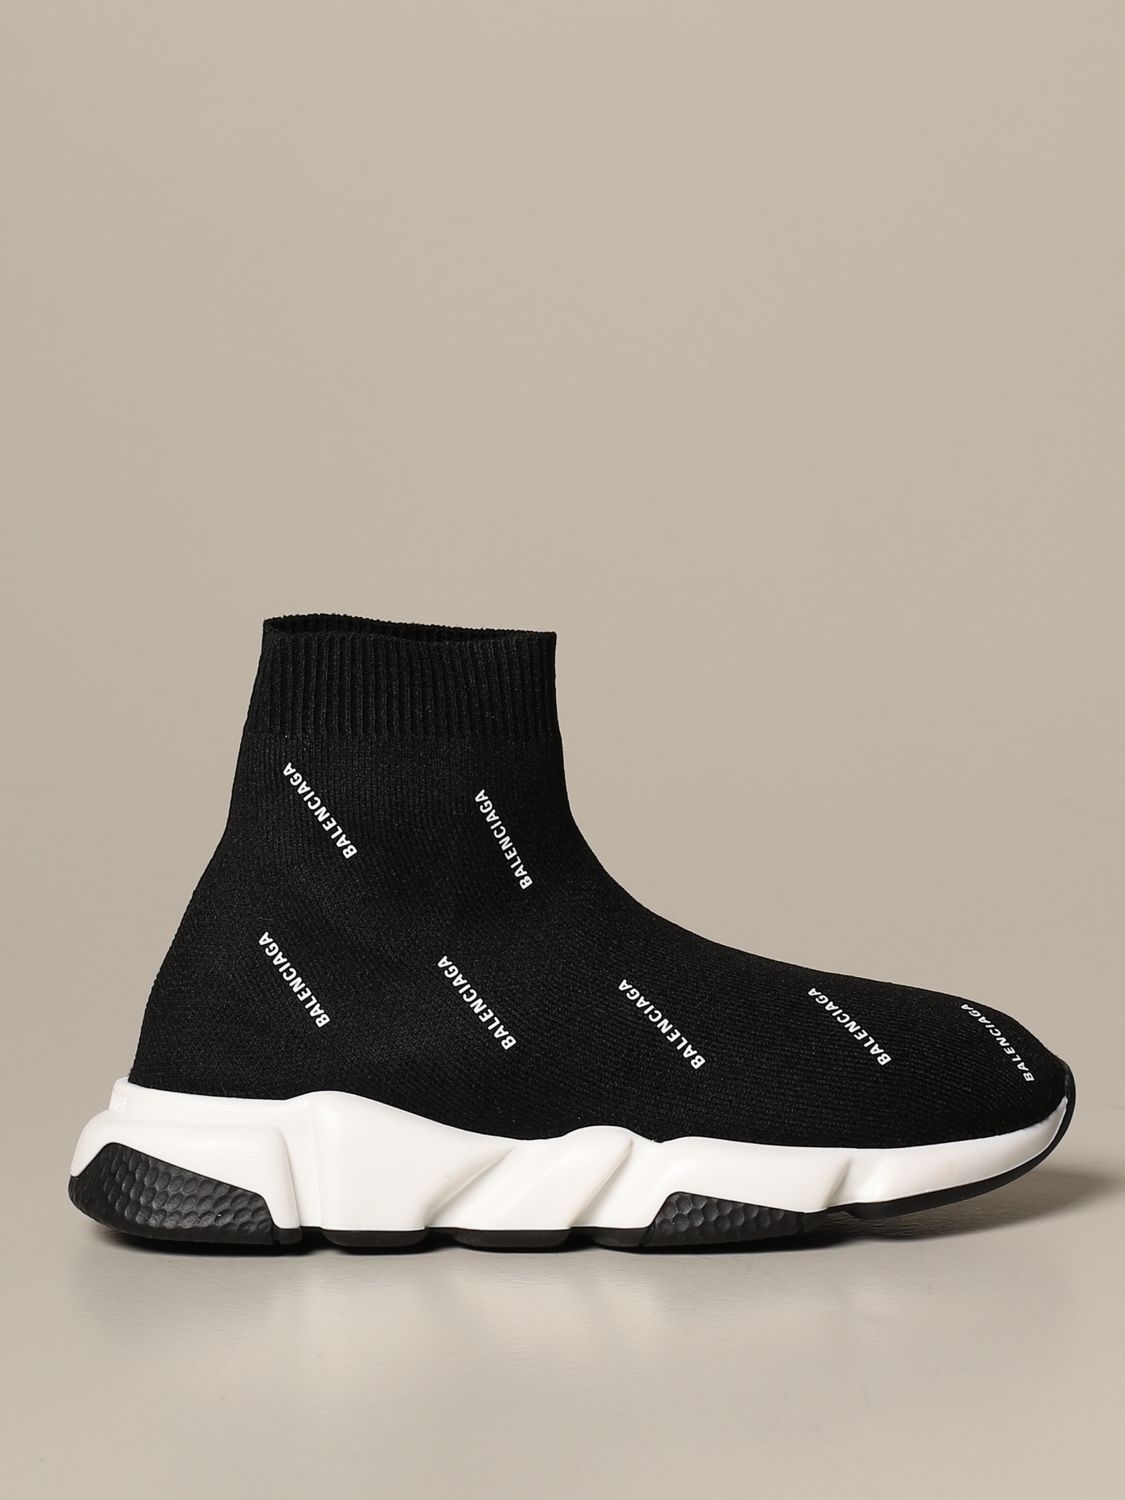 Speed Balenciaga sock sneakers | Shoes 